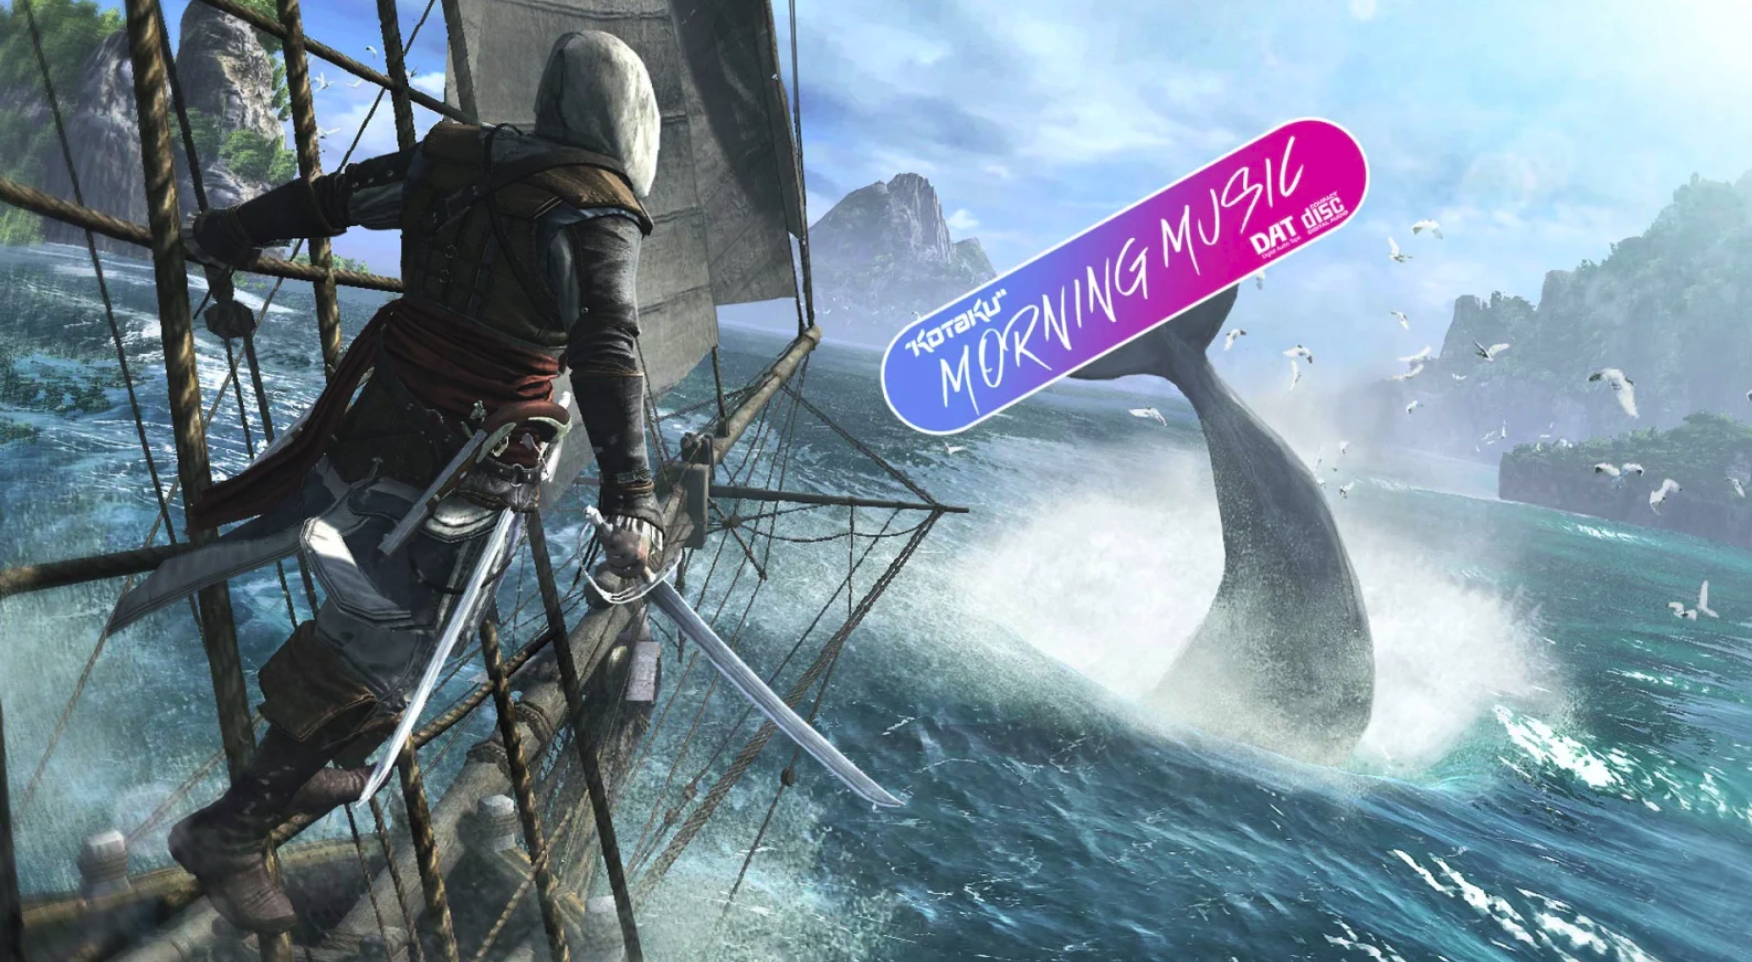 Assassin's Creed IV : BLack Flag (Full Official Soundtrack) - Brian Tyler 